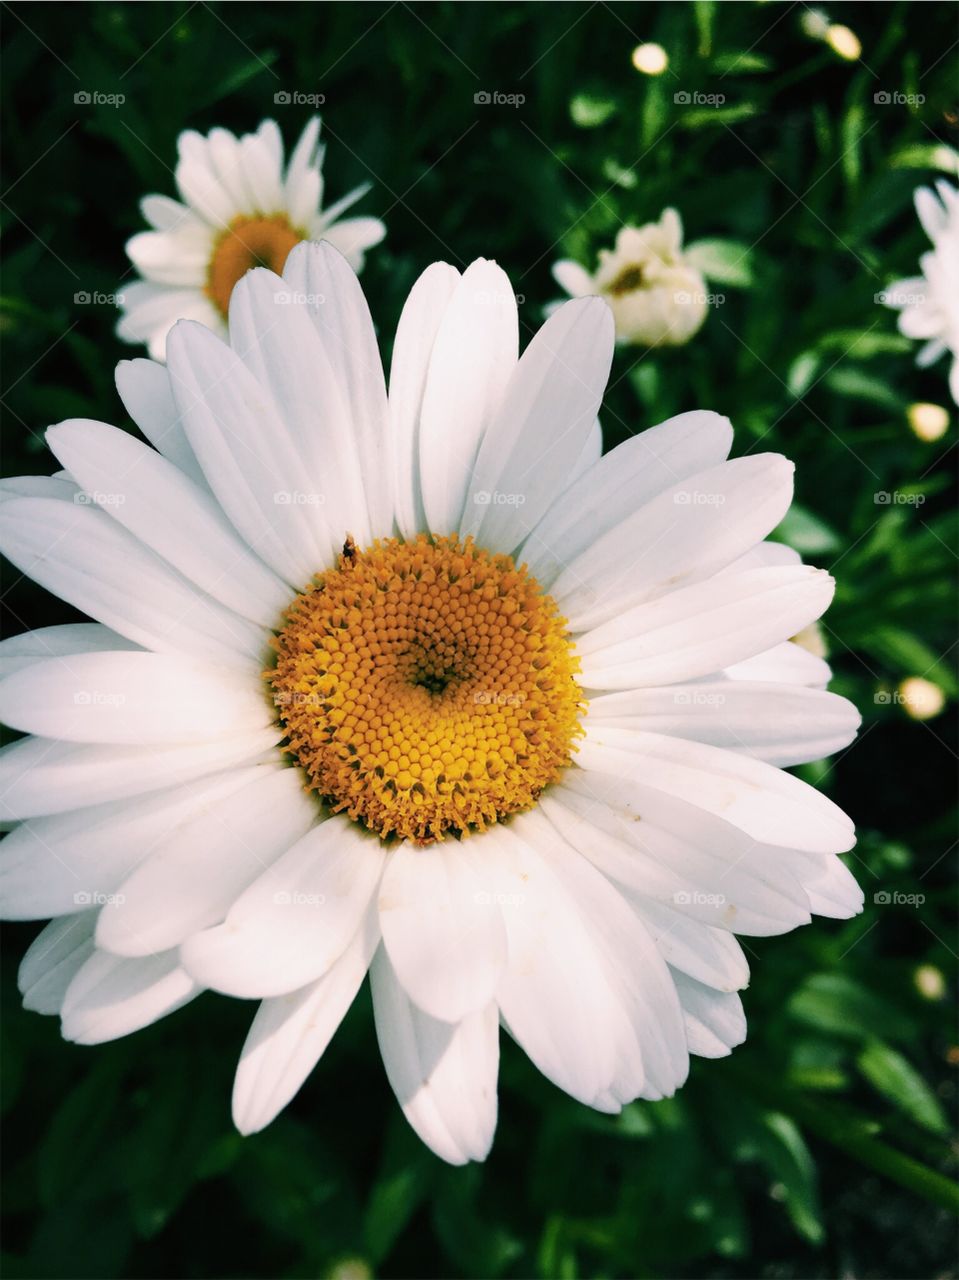 High definition close up flower 